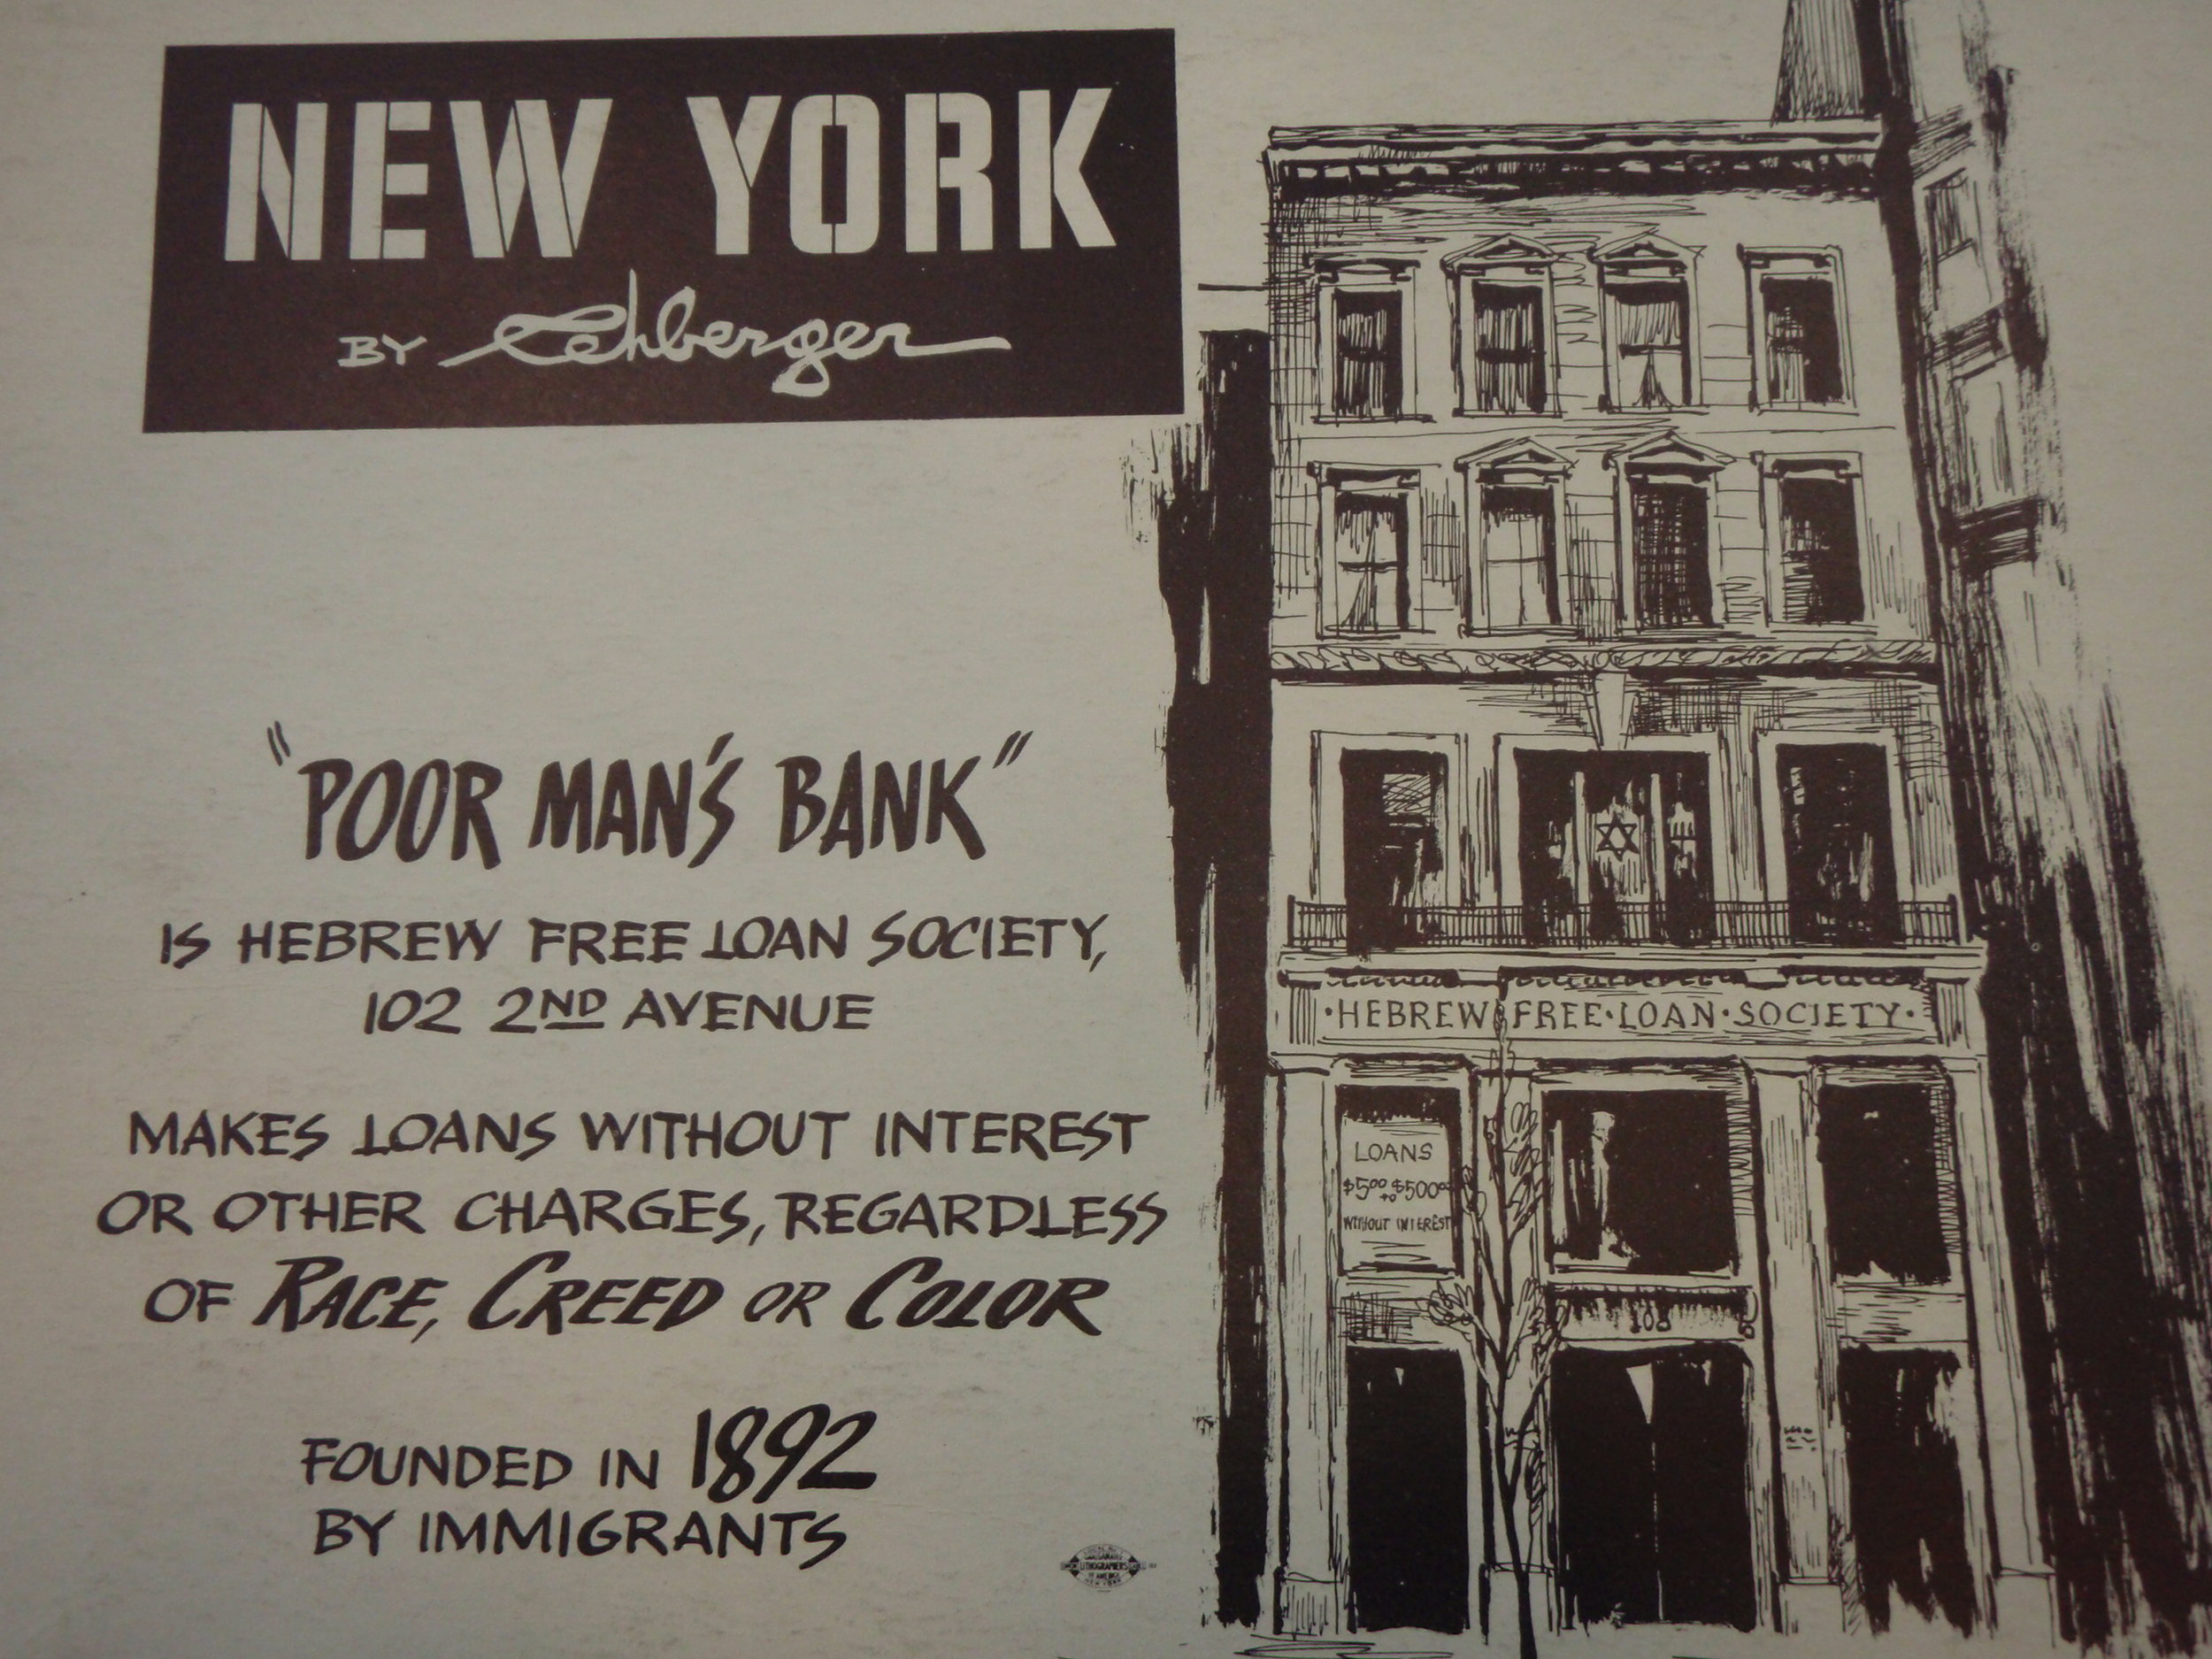 NEW YORK by REHBERGER  1948 #2   Subway Poster  - New York Subways Advertising Co..JPG